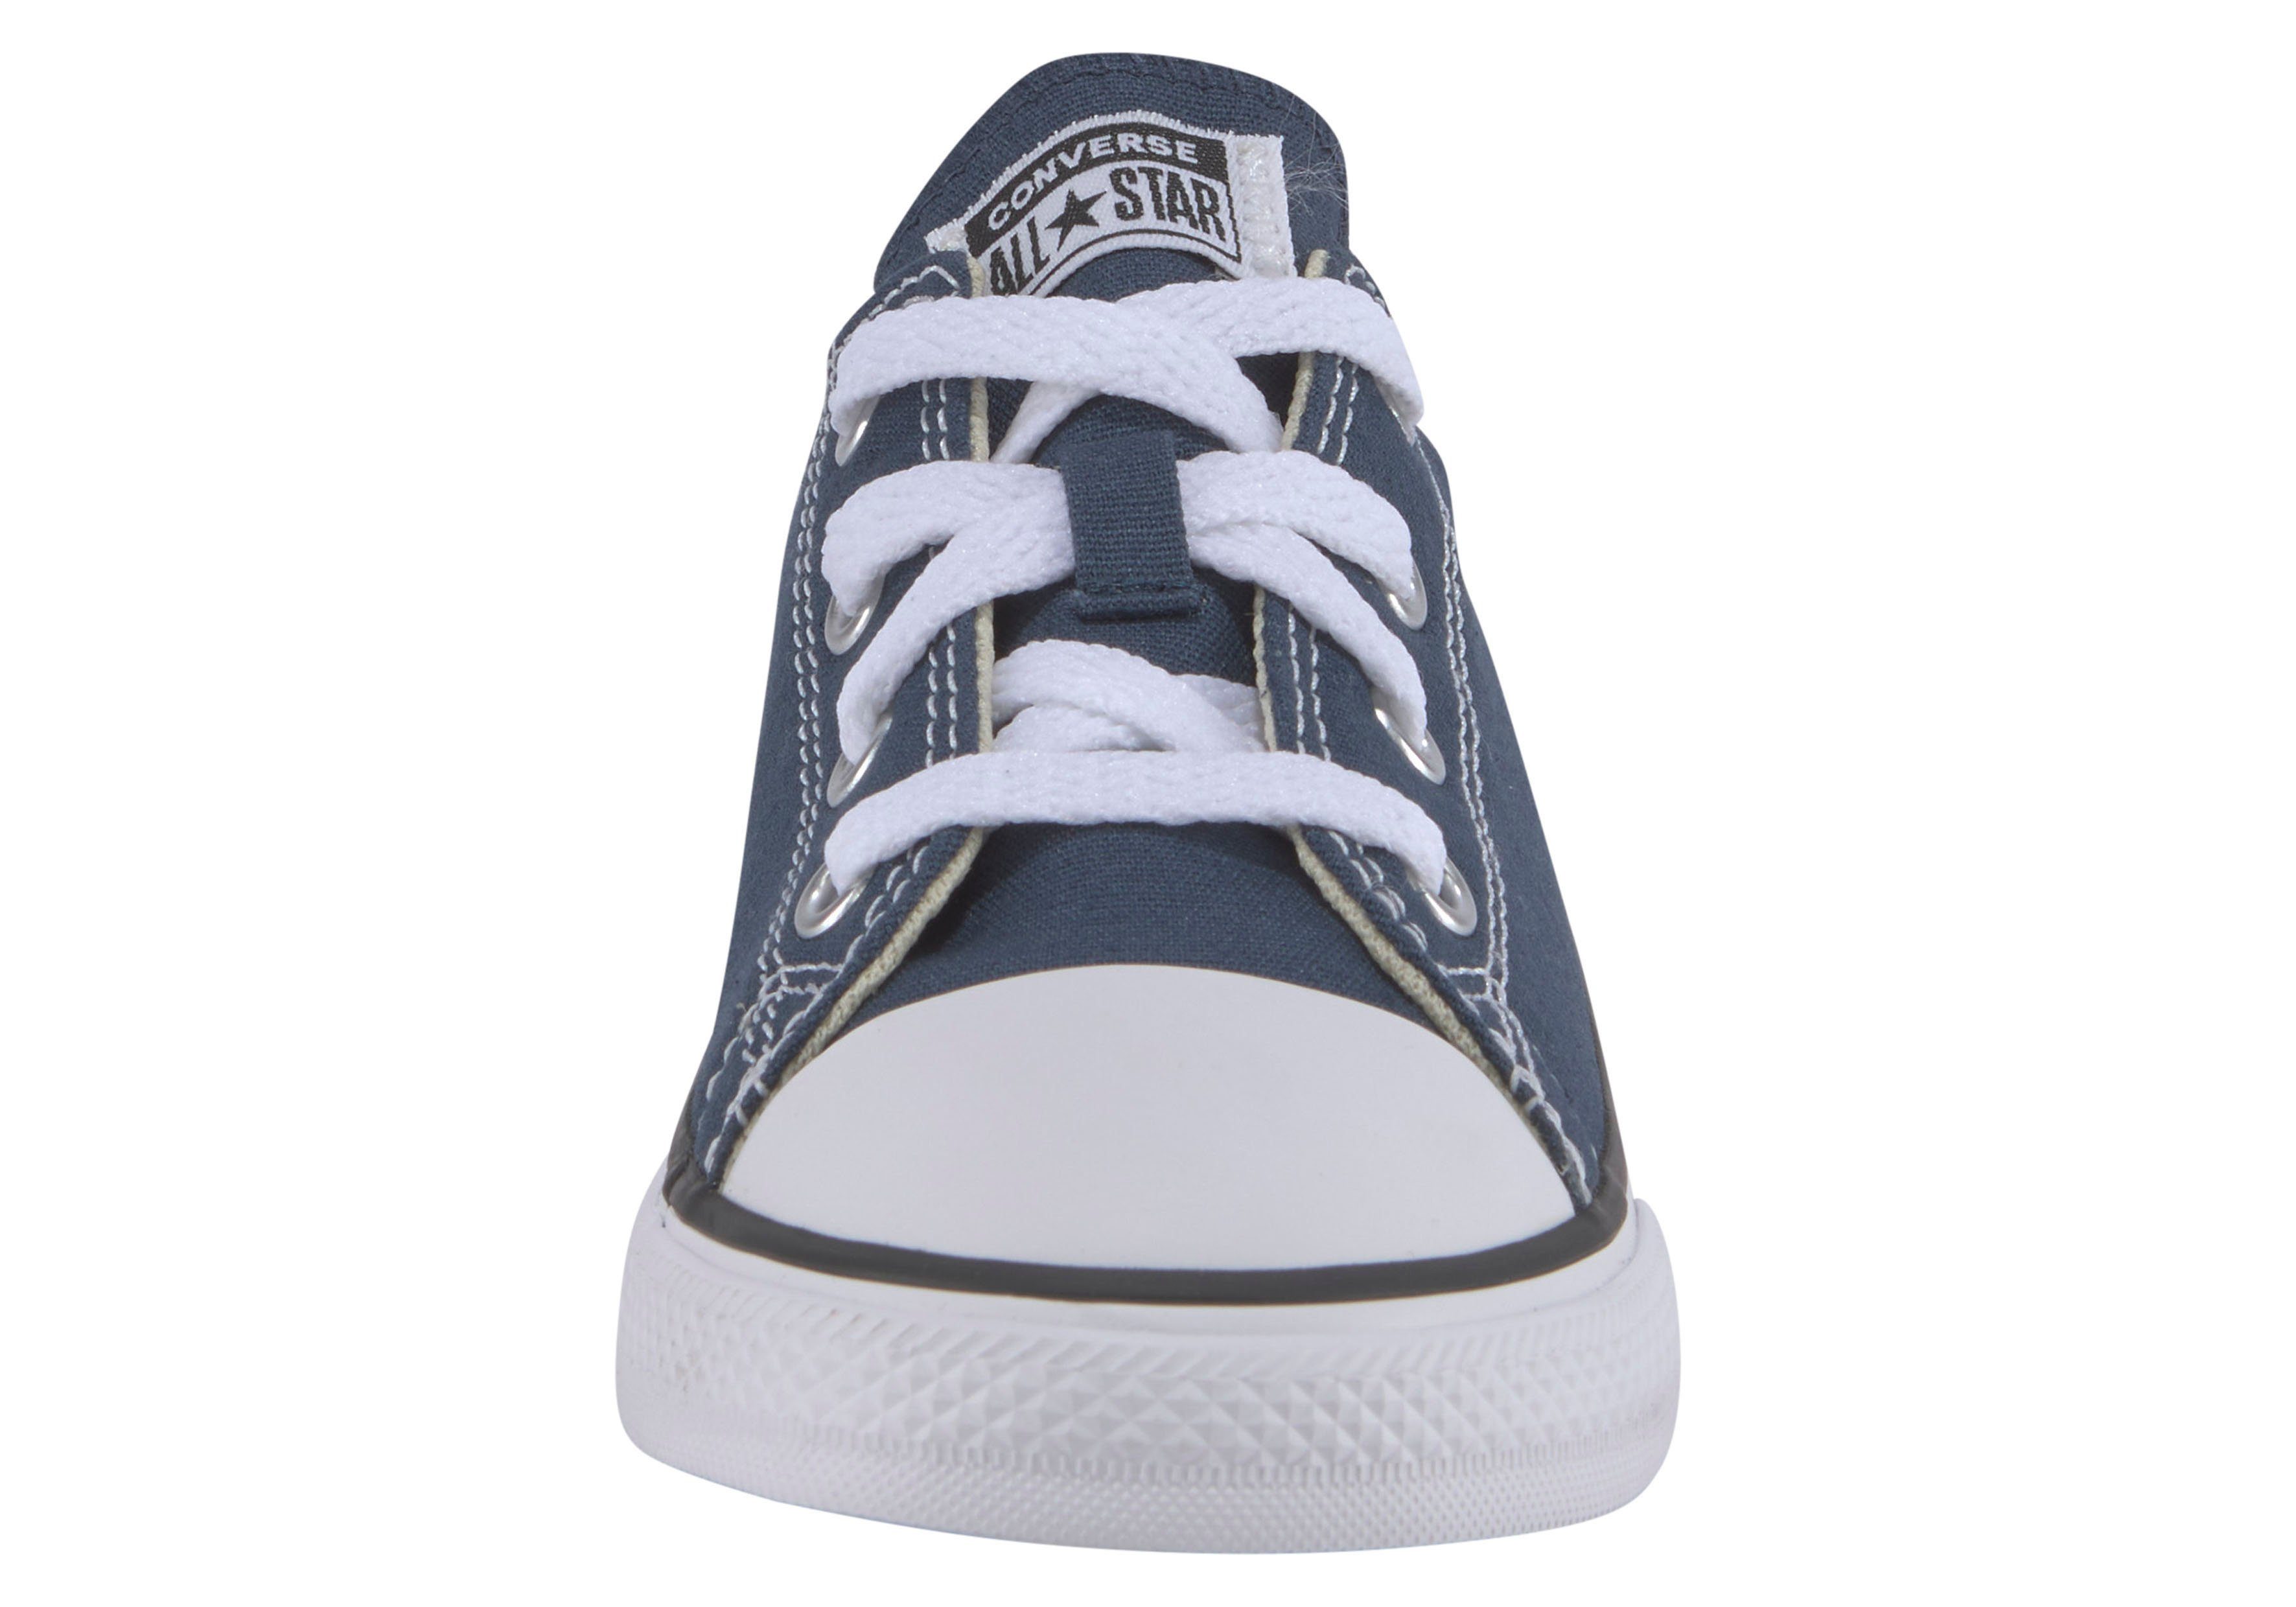 CHUCK Converse Kinder Sneaker ALL OX marine für TAYLOR STAR